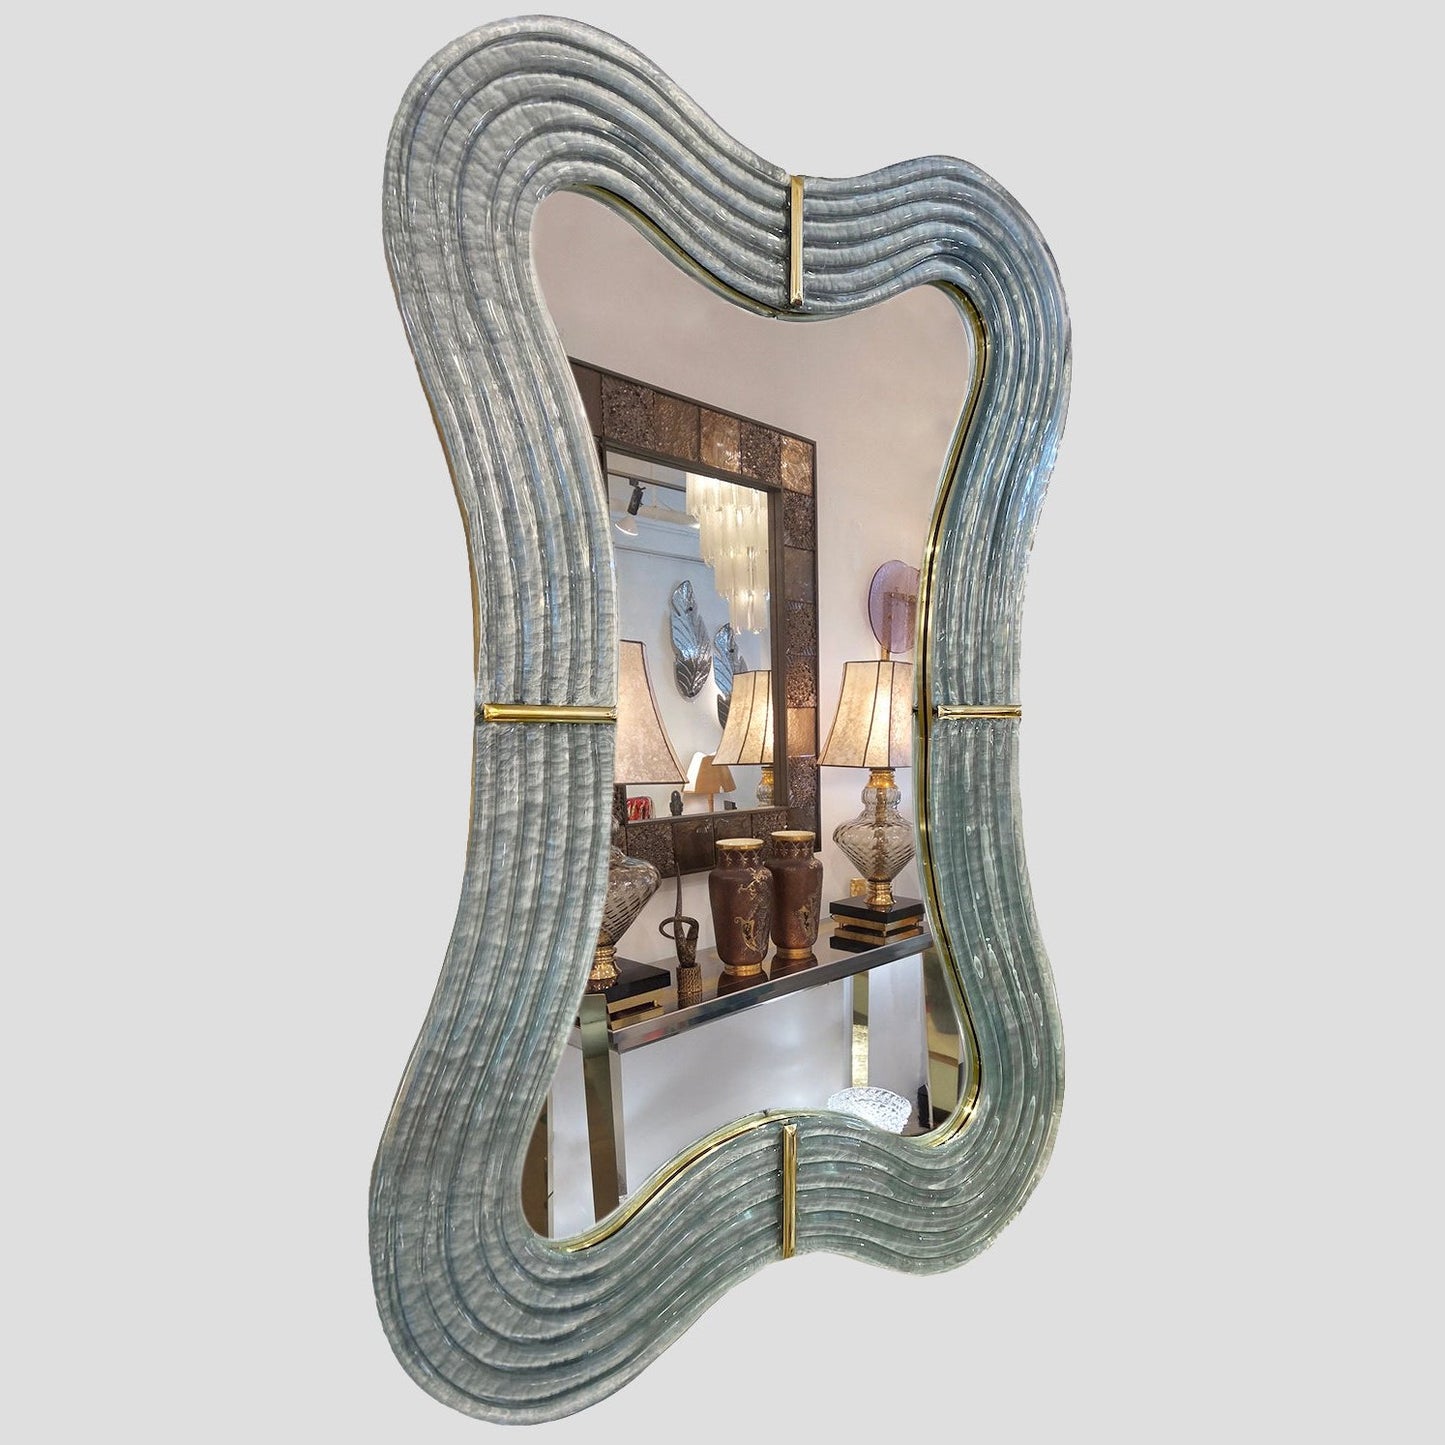 Contemporary Italian Pearl Gray Blue Murano Glass Curved Mirror & Brass Accents